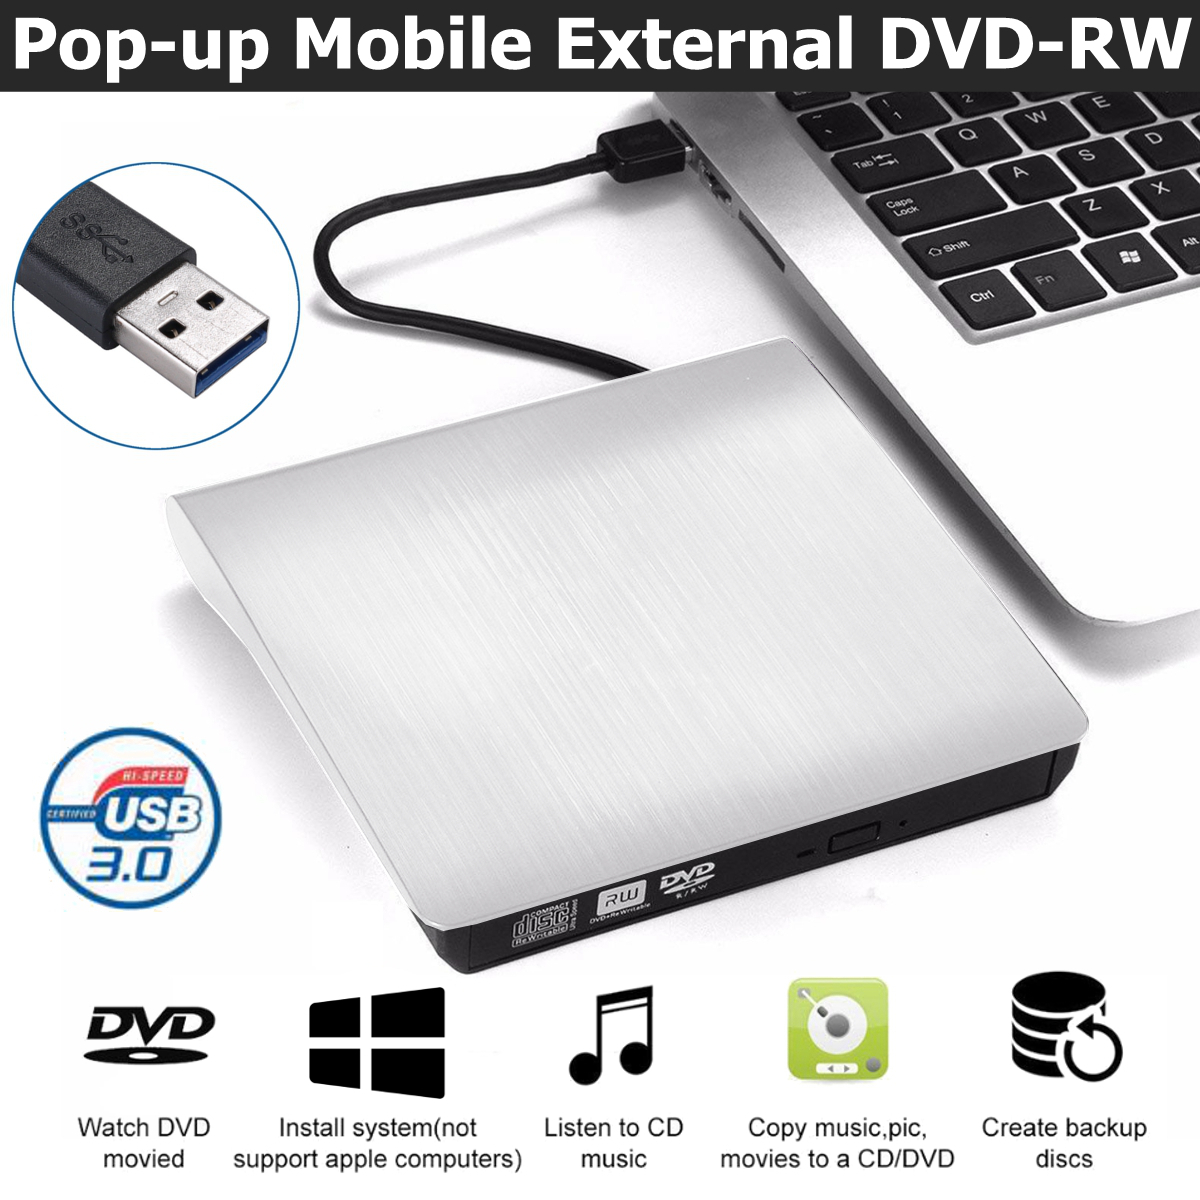 USB 3.0 Slim External DVD Optical Drive DVD-RW CD-RW Combo Drive Burner Reader Player 6